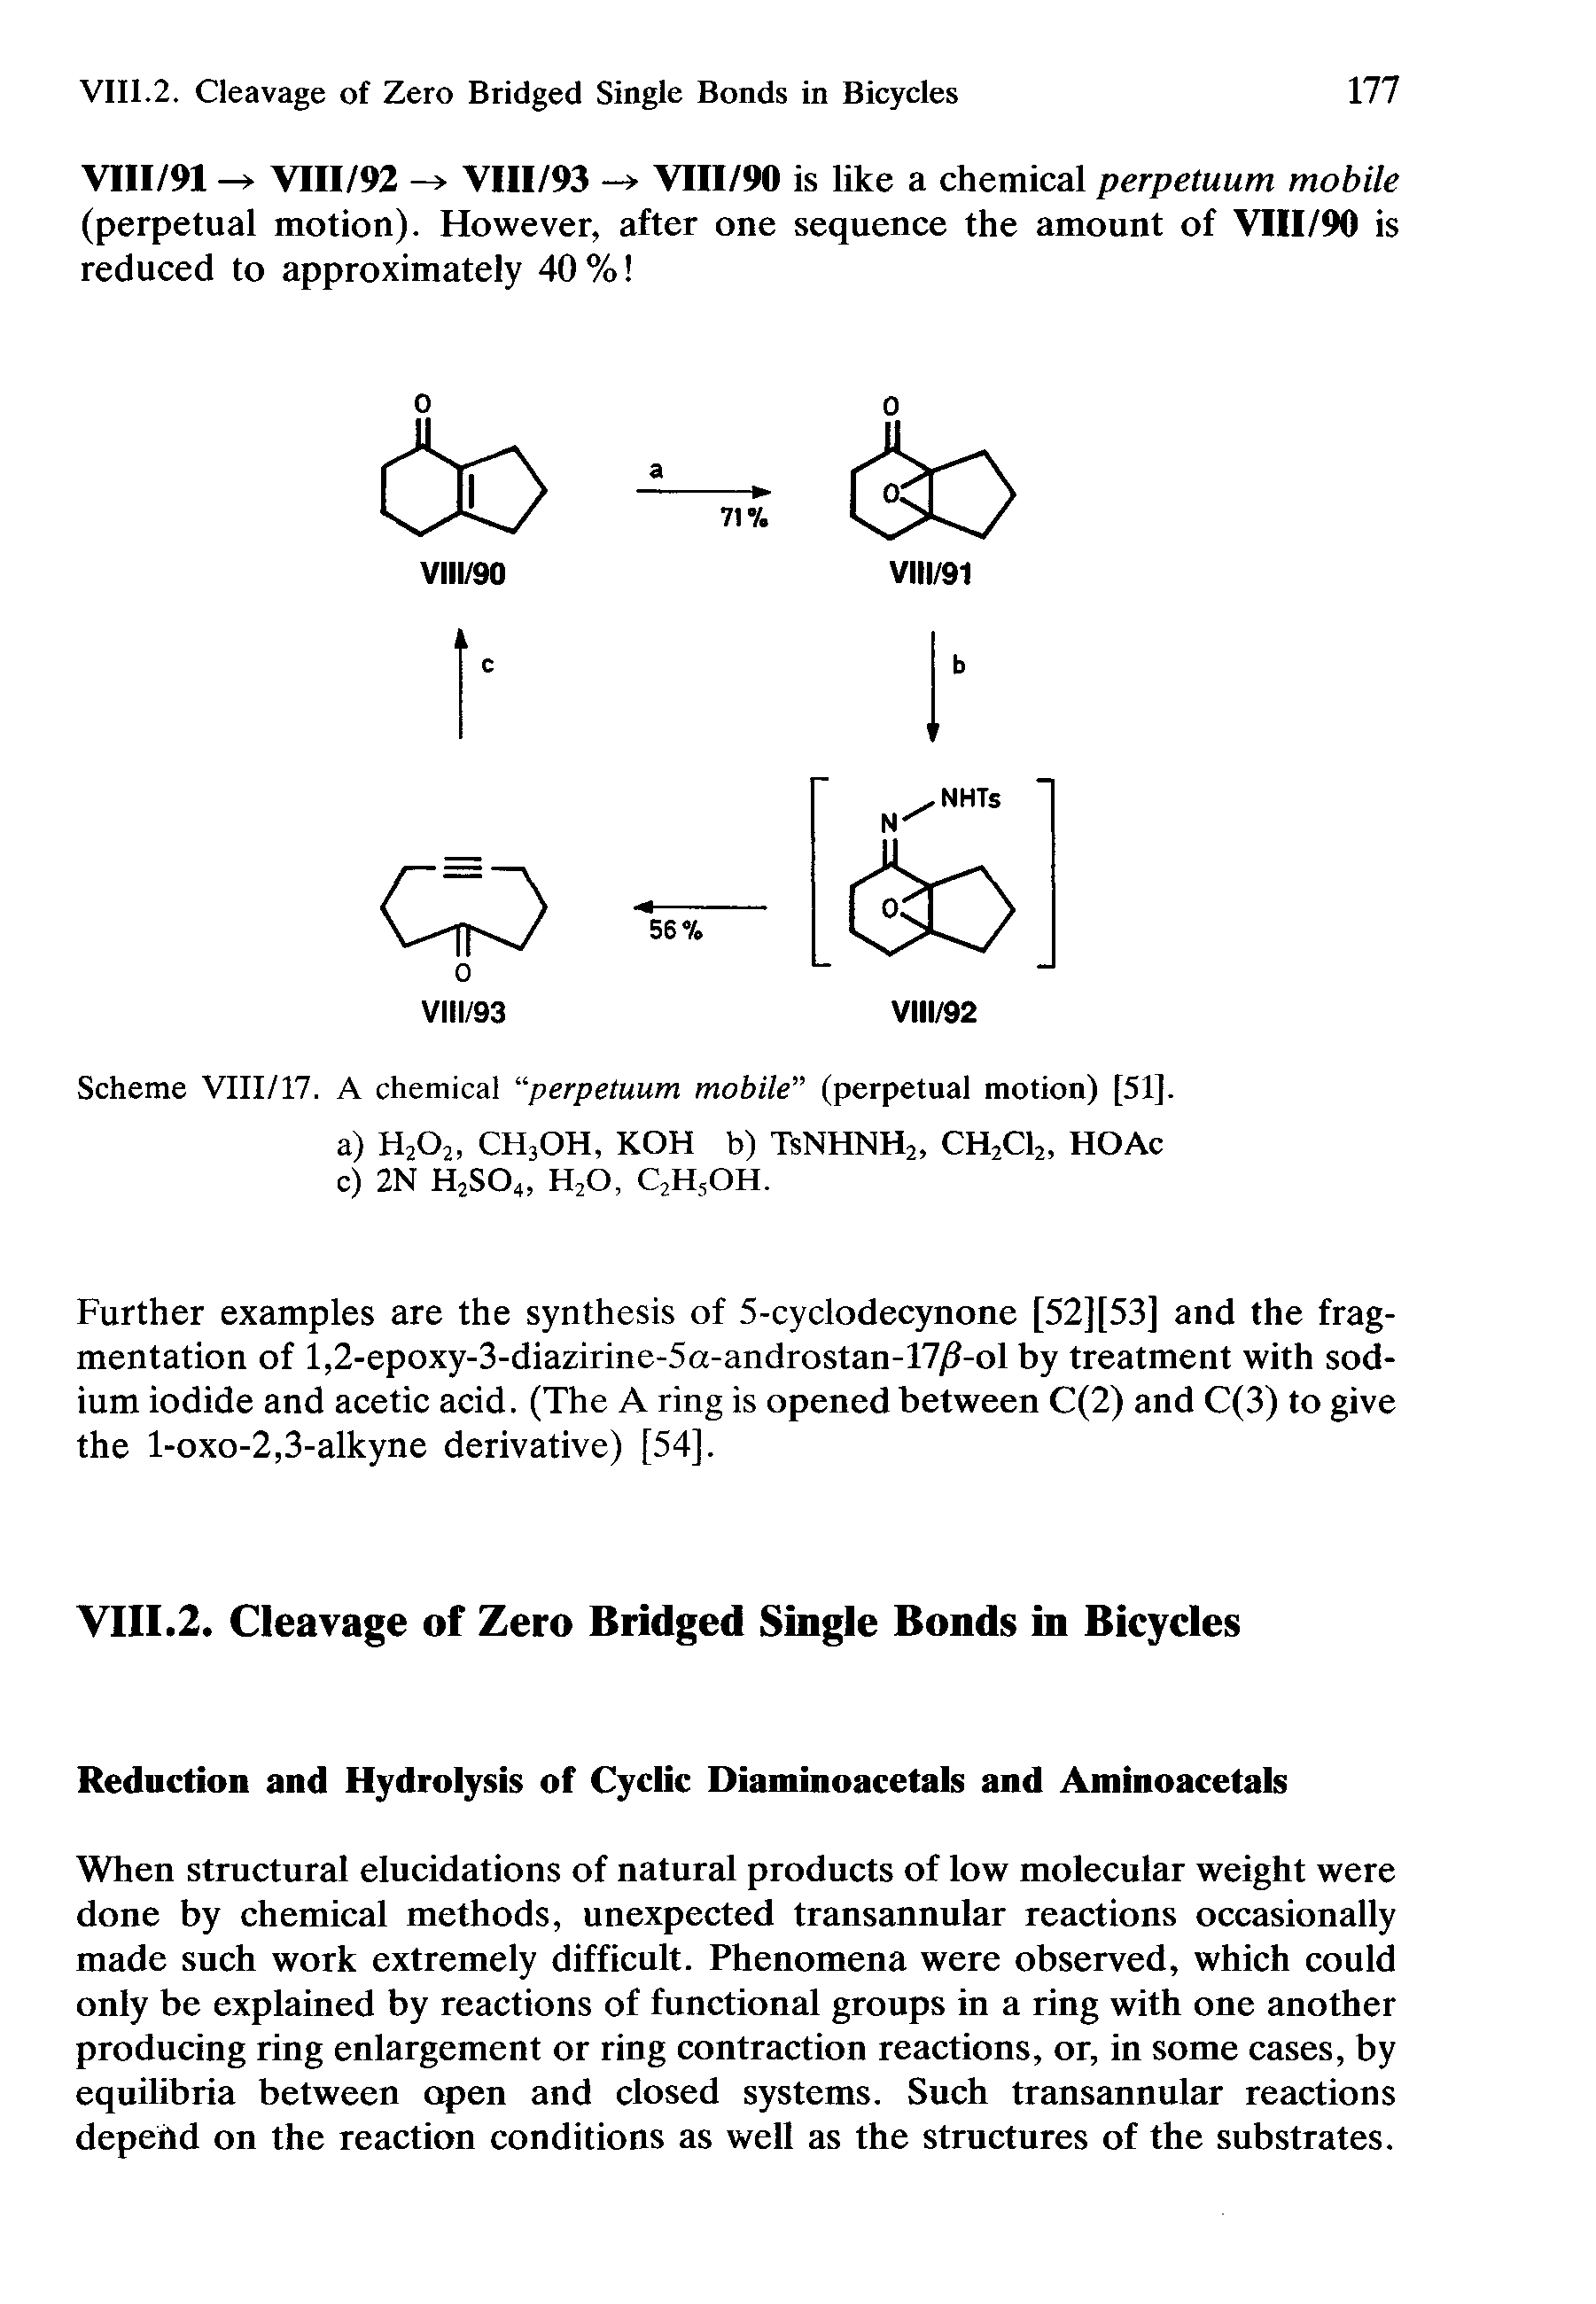 Scheme VIII/17. A chemical perpetuum mobile (perpetual motion) [51].